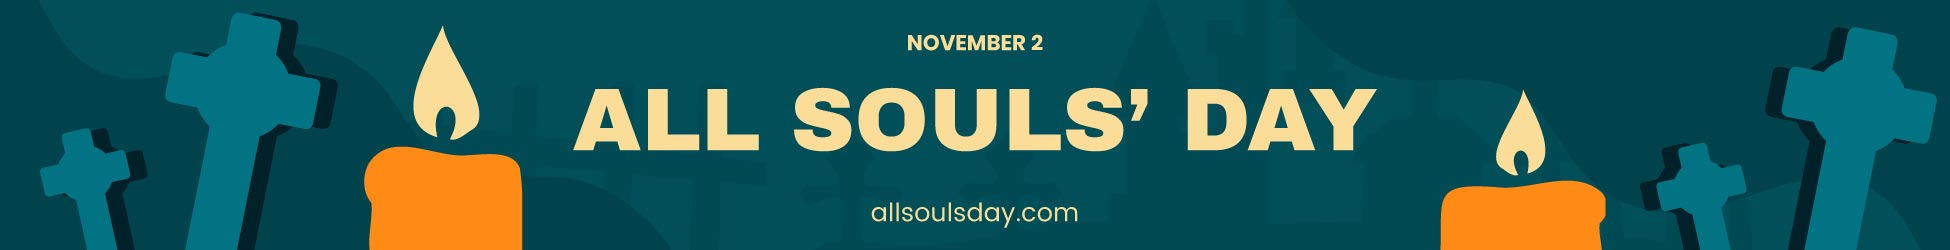 All Souls' Day Website Banner in Illustrator, PSD, EPS, SVG, JPG, PNG